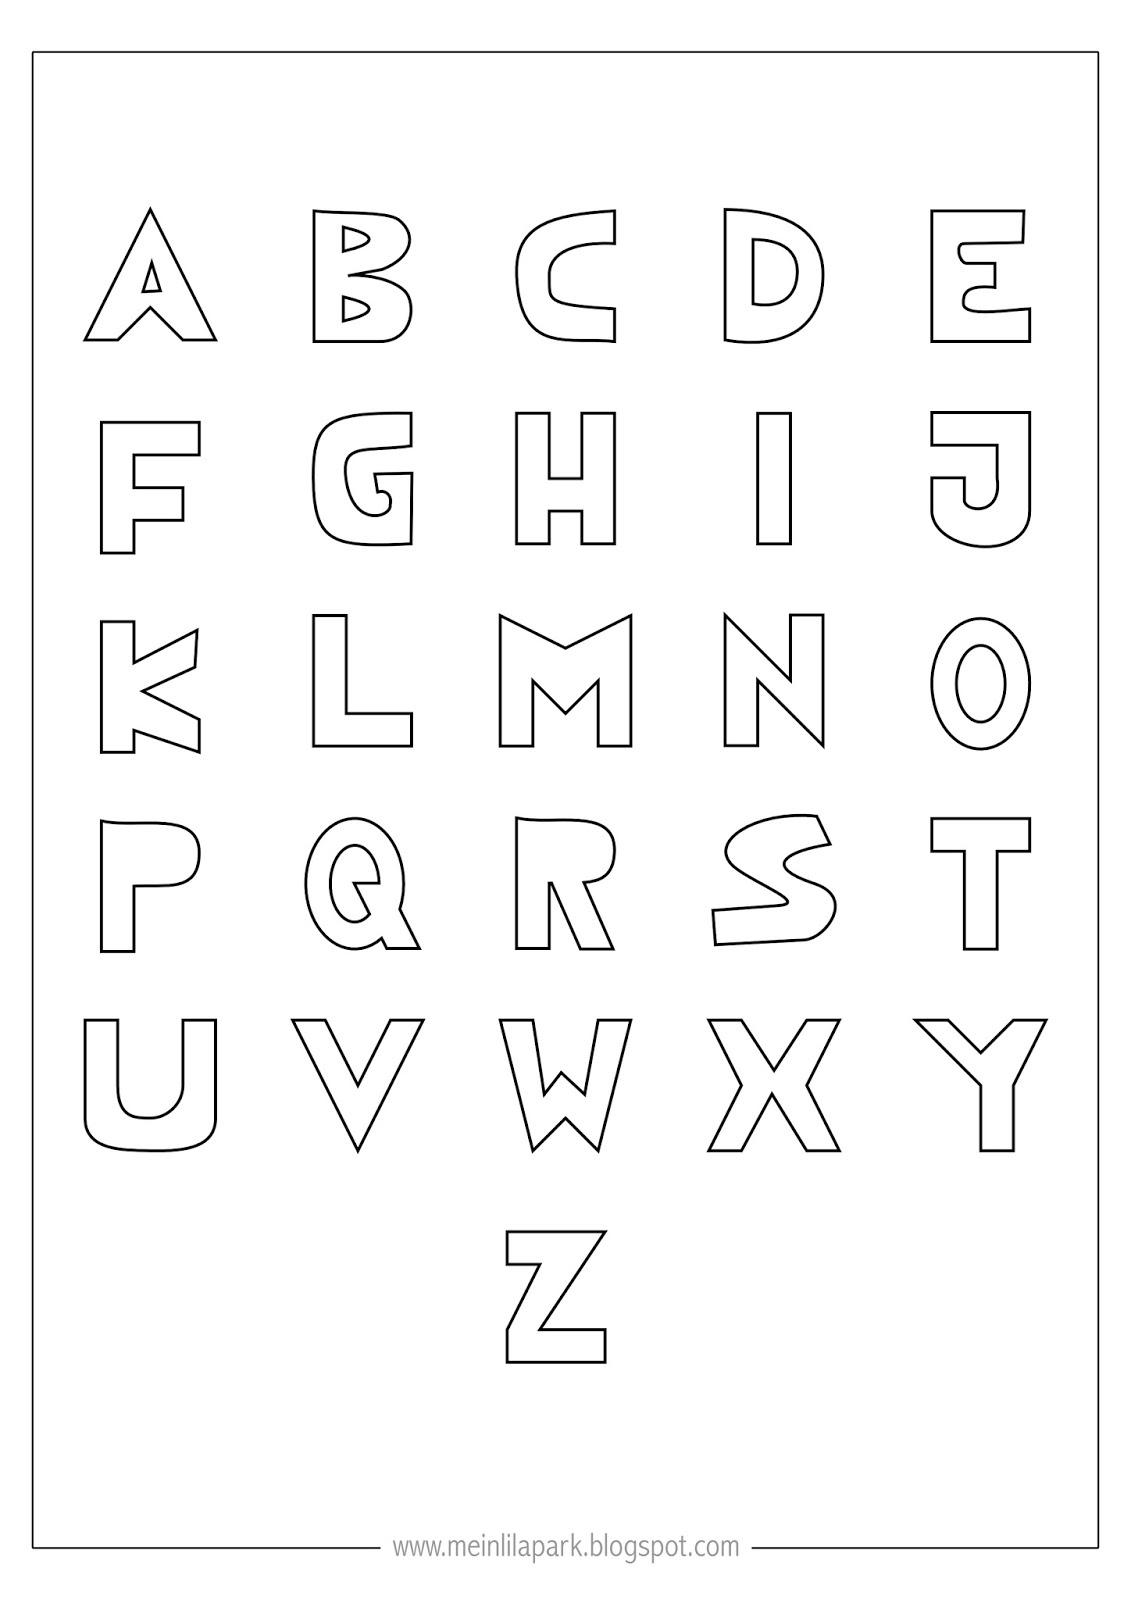 Free Printable Coloring Alphabet Letters Ausdruckbares Ausmal 